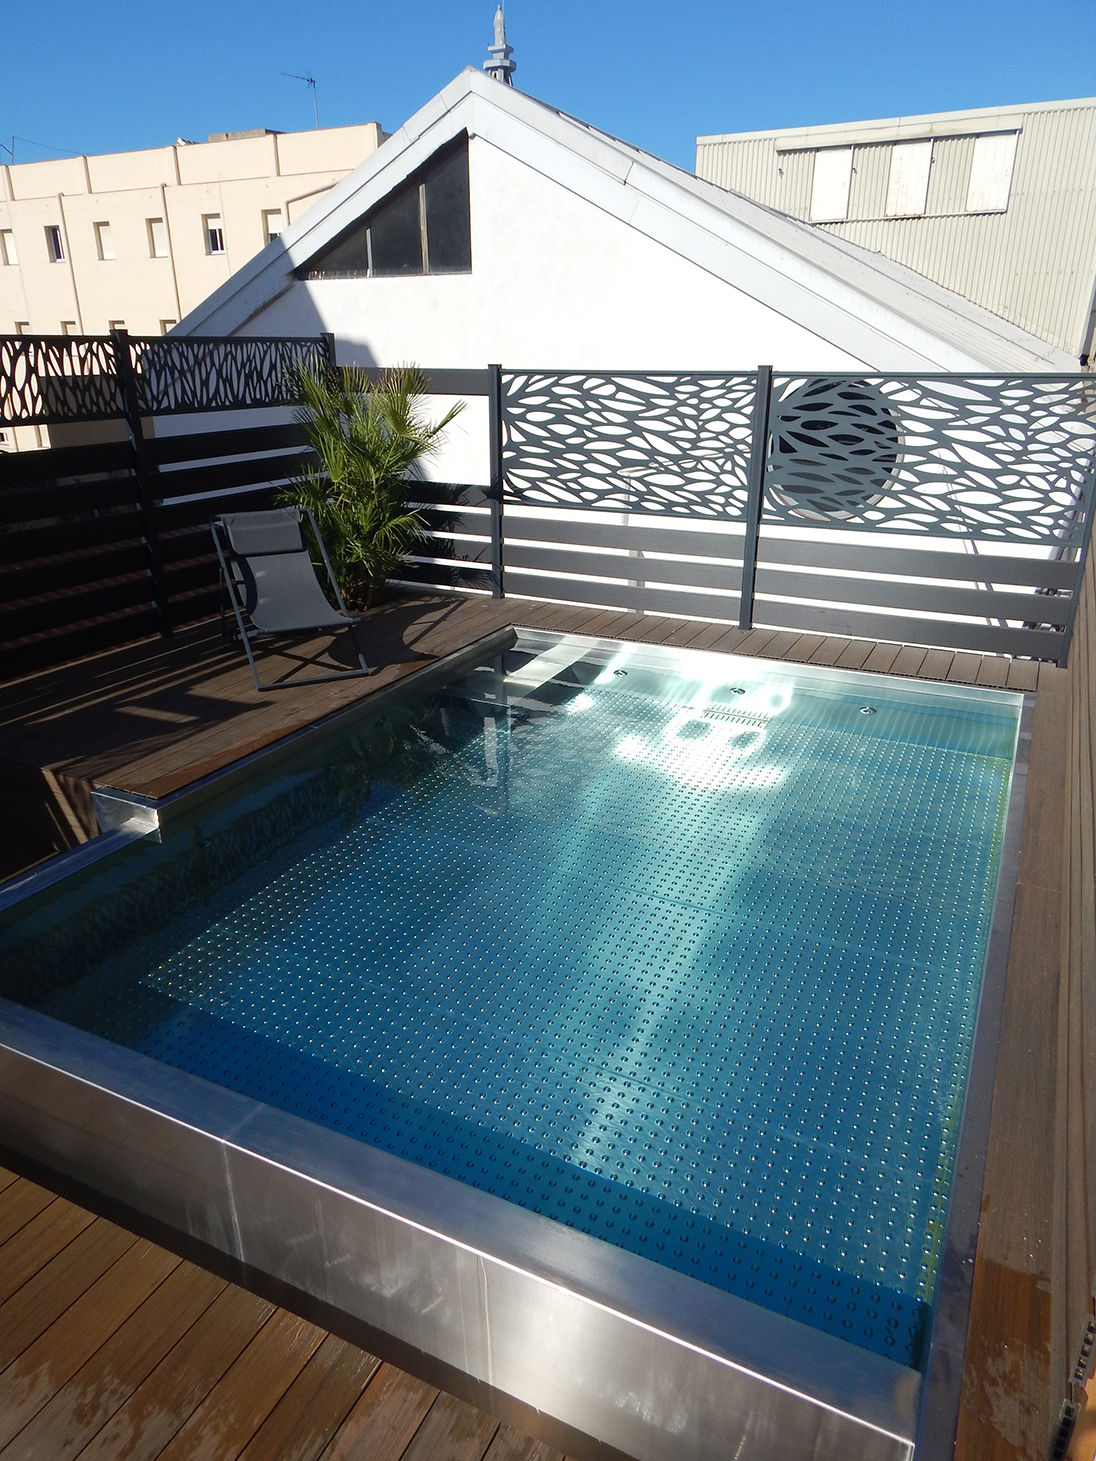 piscina-de-acero-inoxidable-atico-terraza-azotea-4986